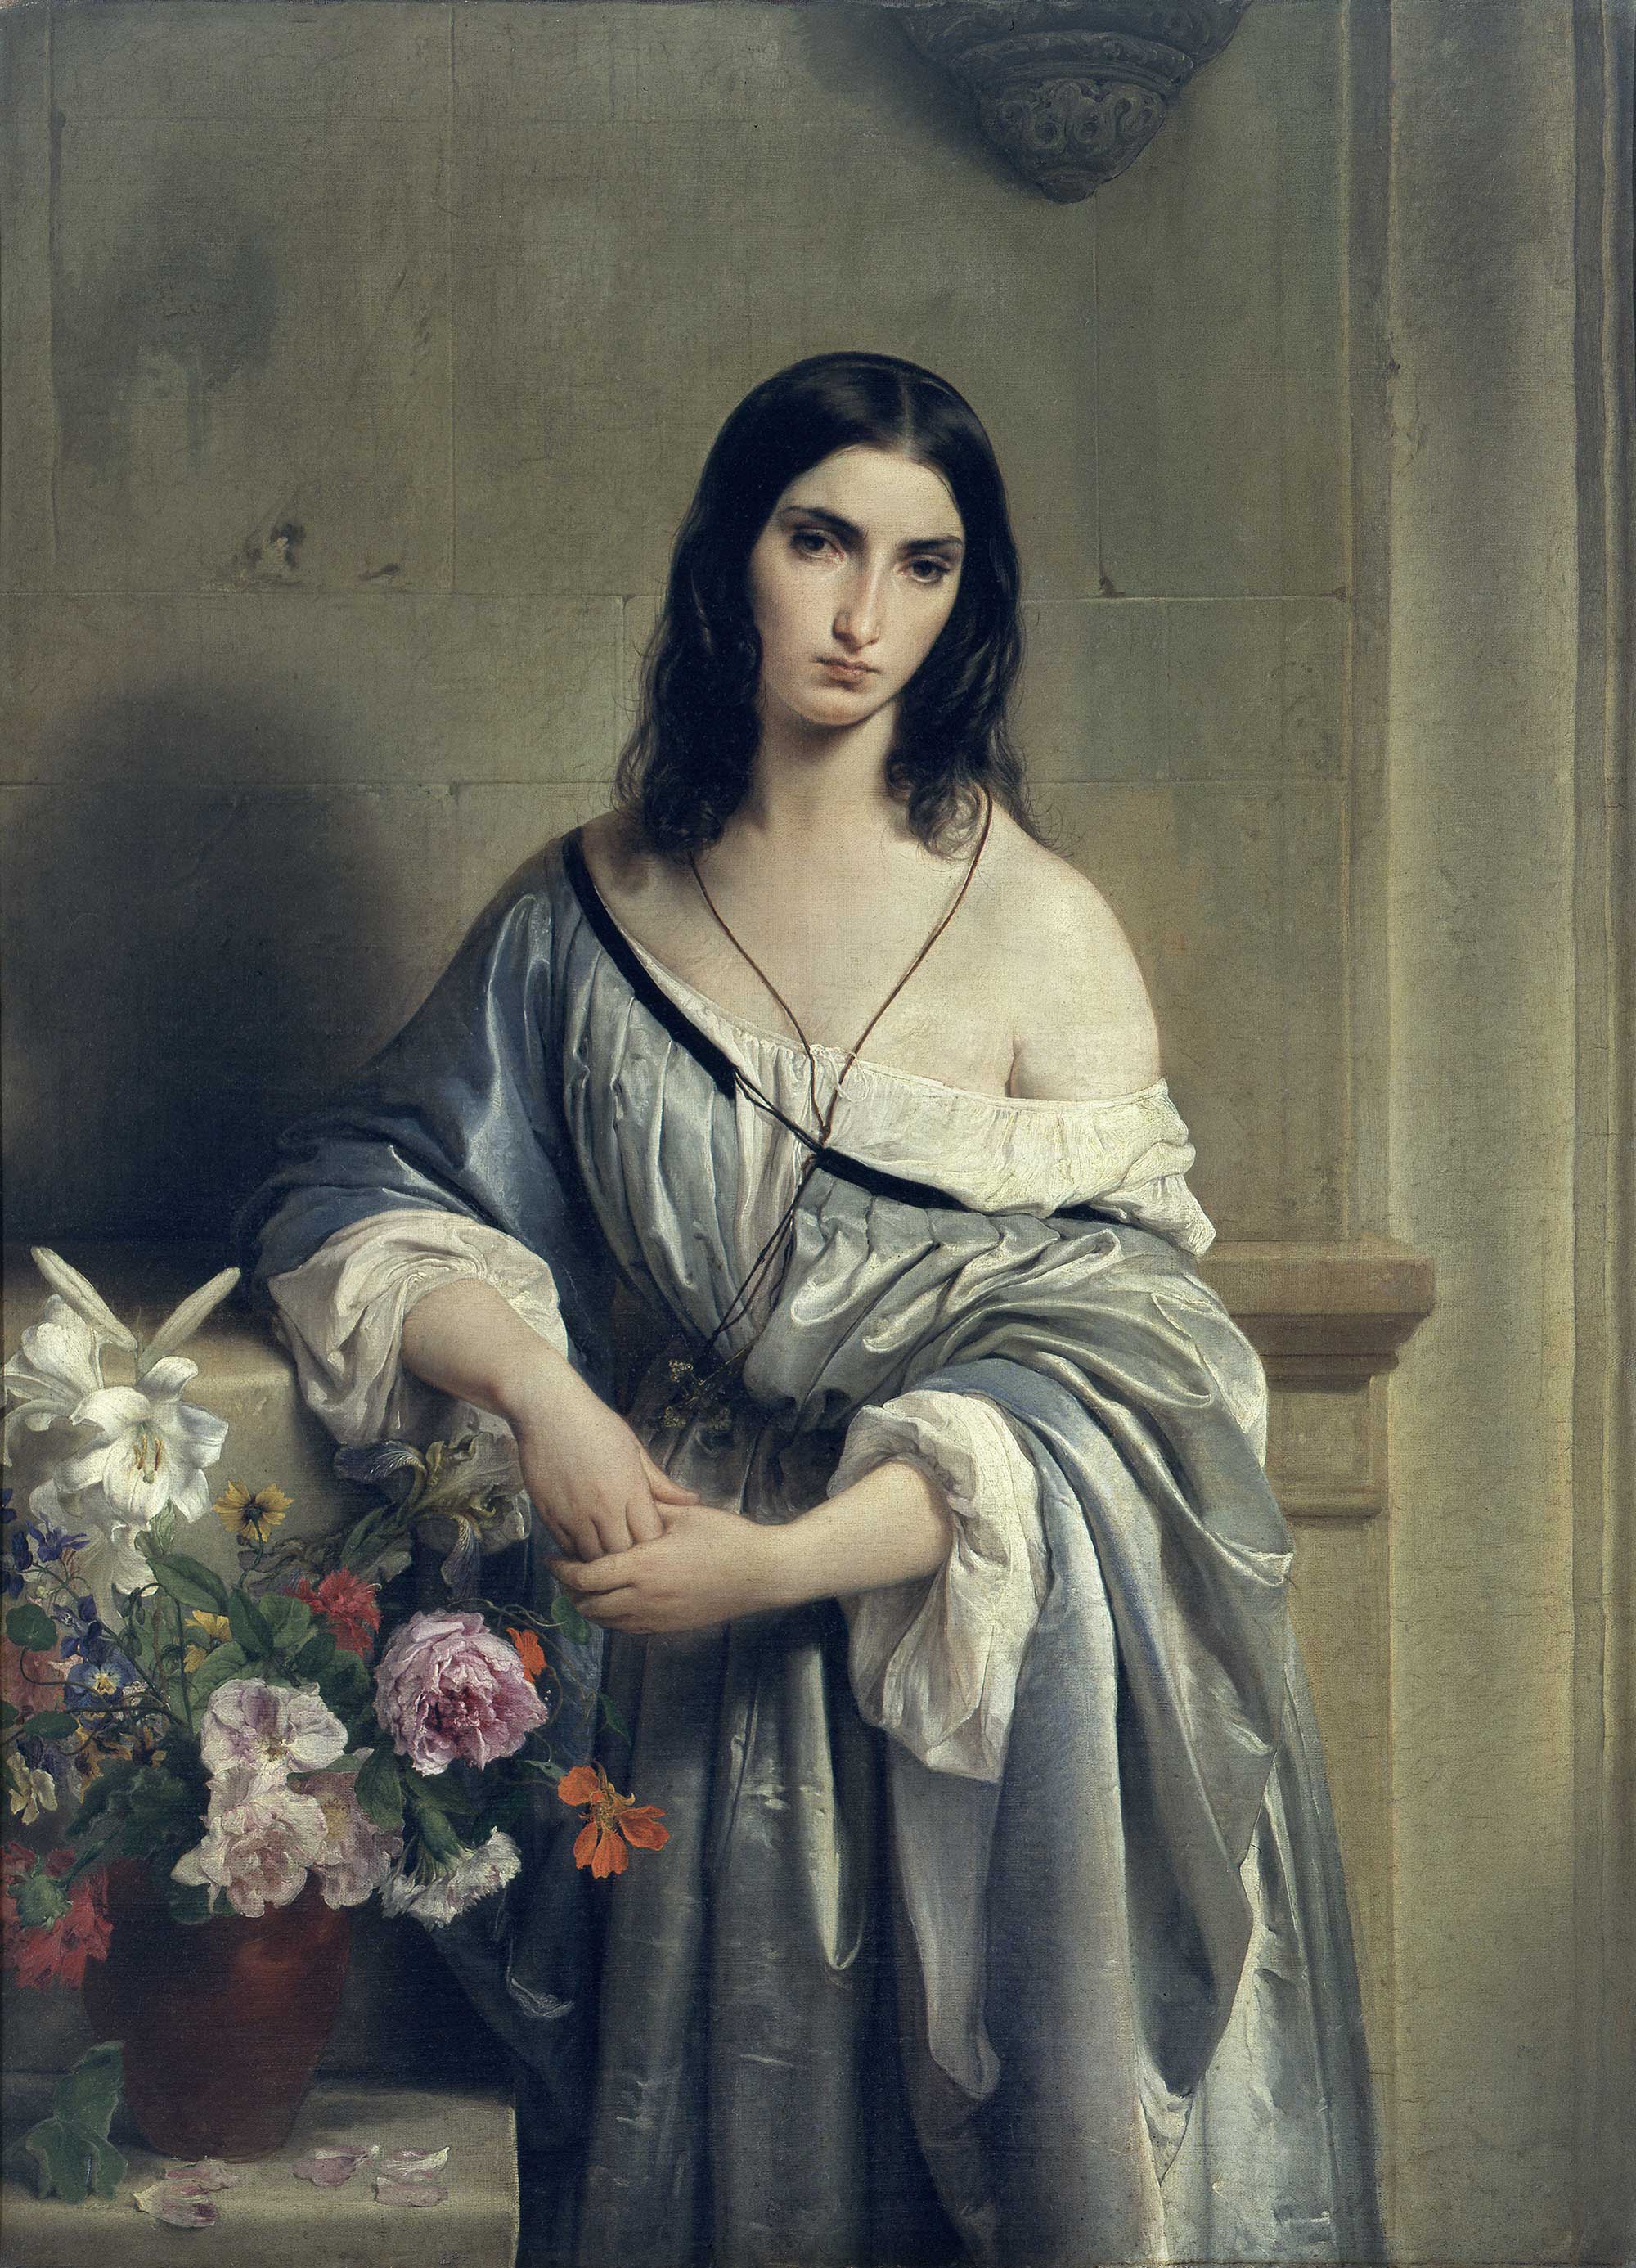 Francesco Hayez "Malinconia", 1840-1842. Olio su tela, 138 × 101 cm. Pinacoteca di Brera, Milano